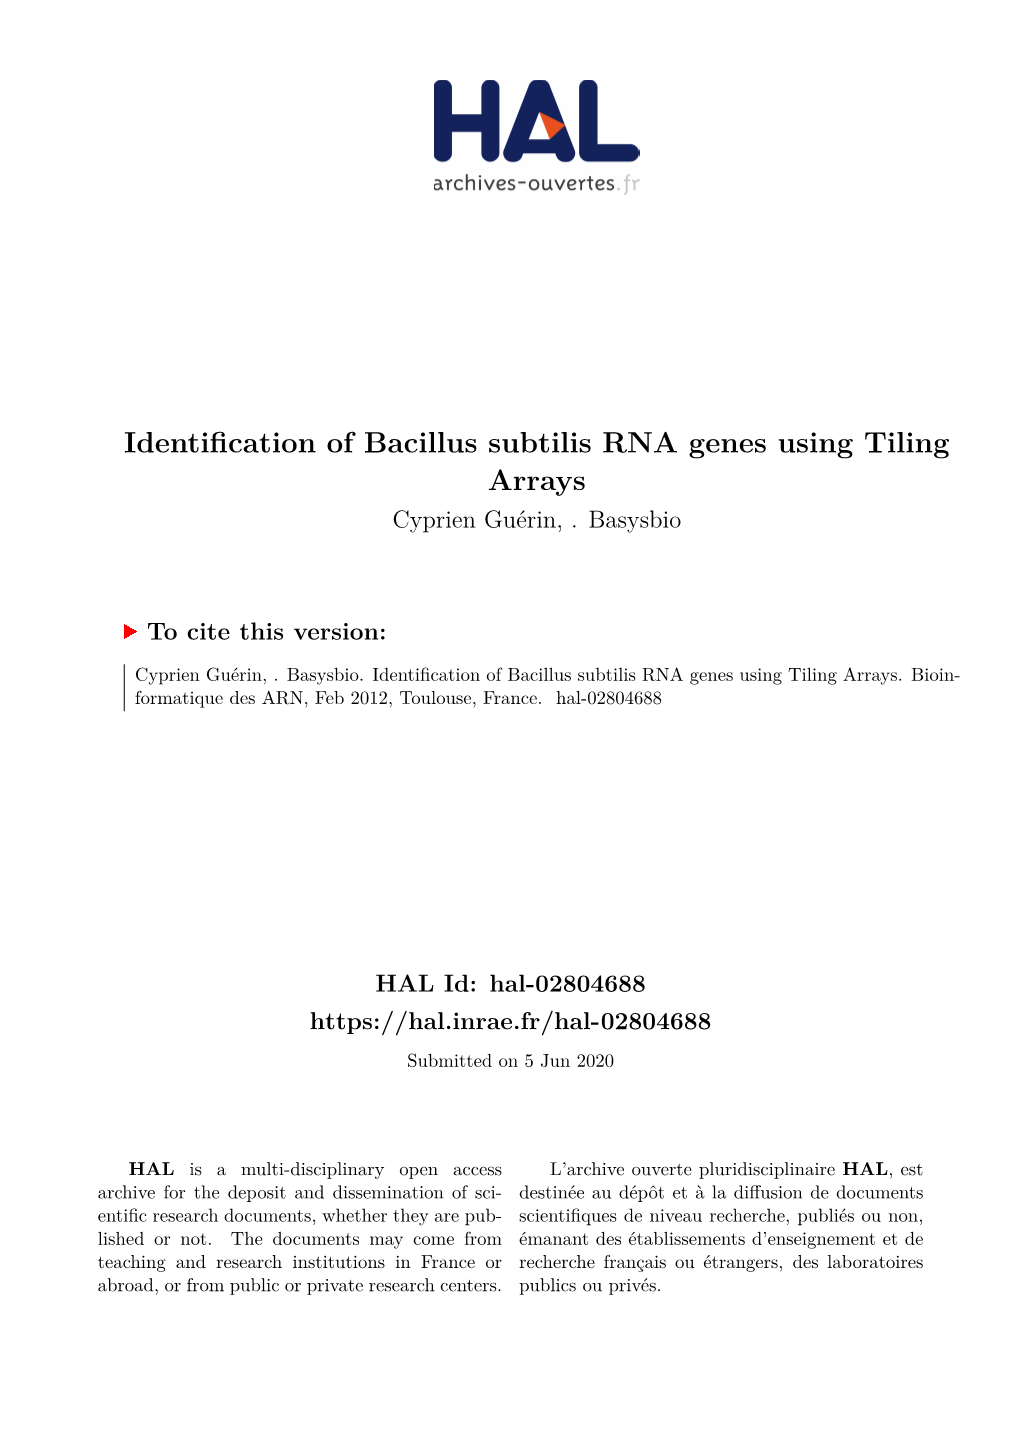 Identification of Bacillus Subtilis RNA Genes Using Tiling Arrays Cyprien Guérin